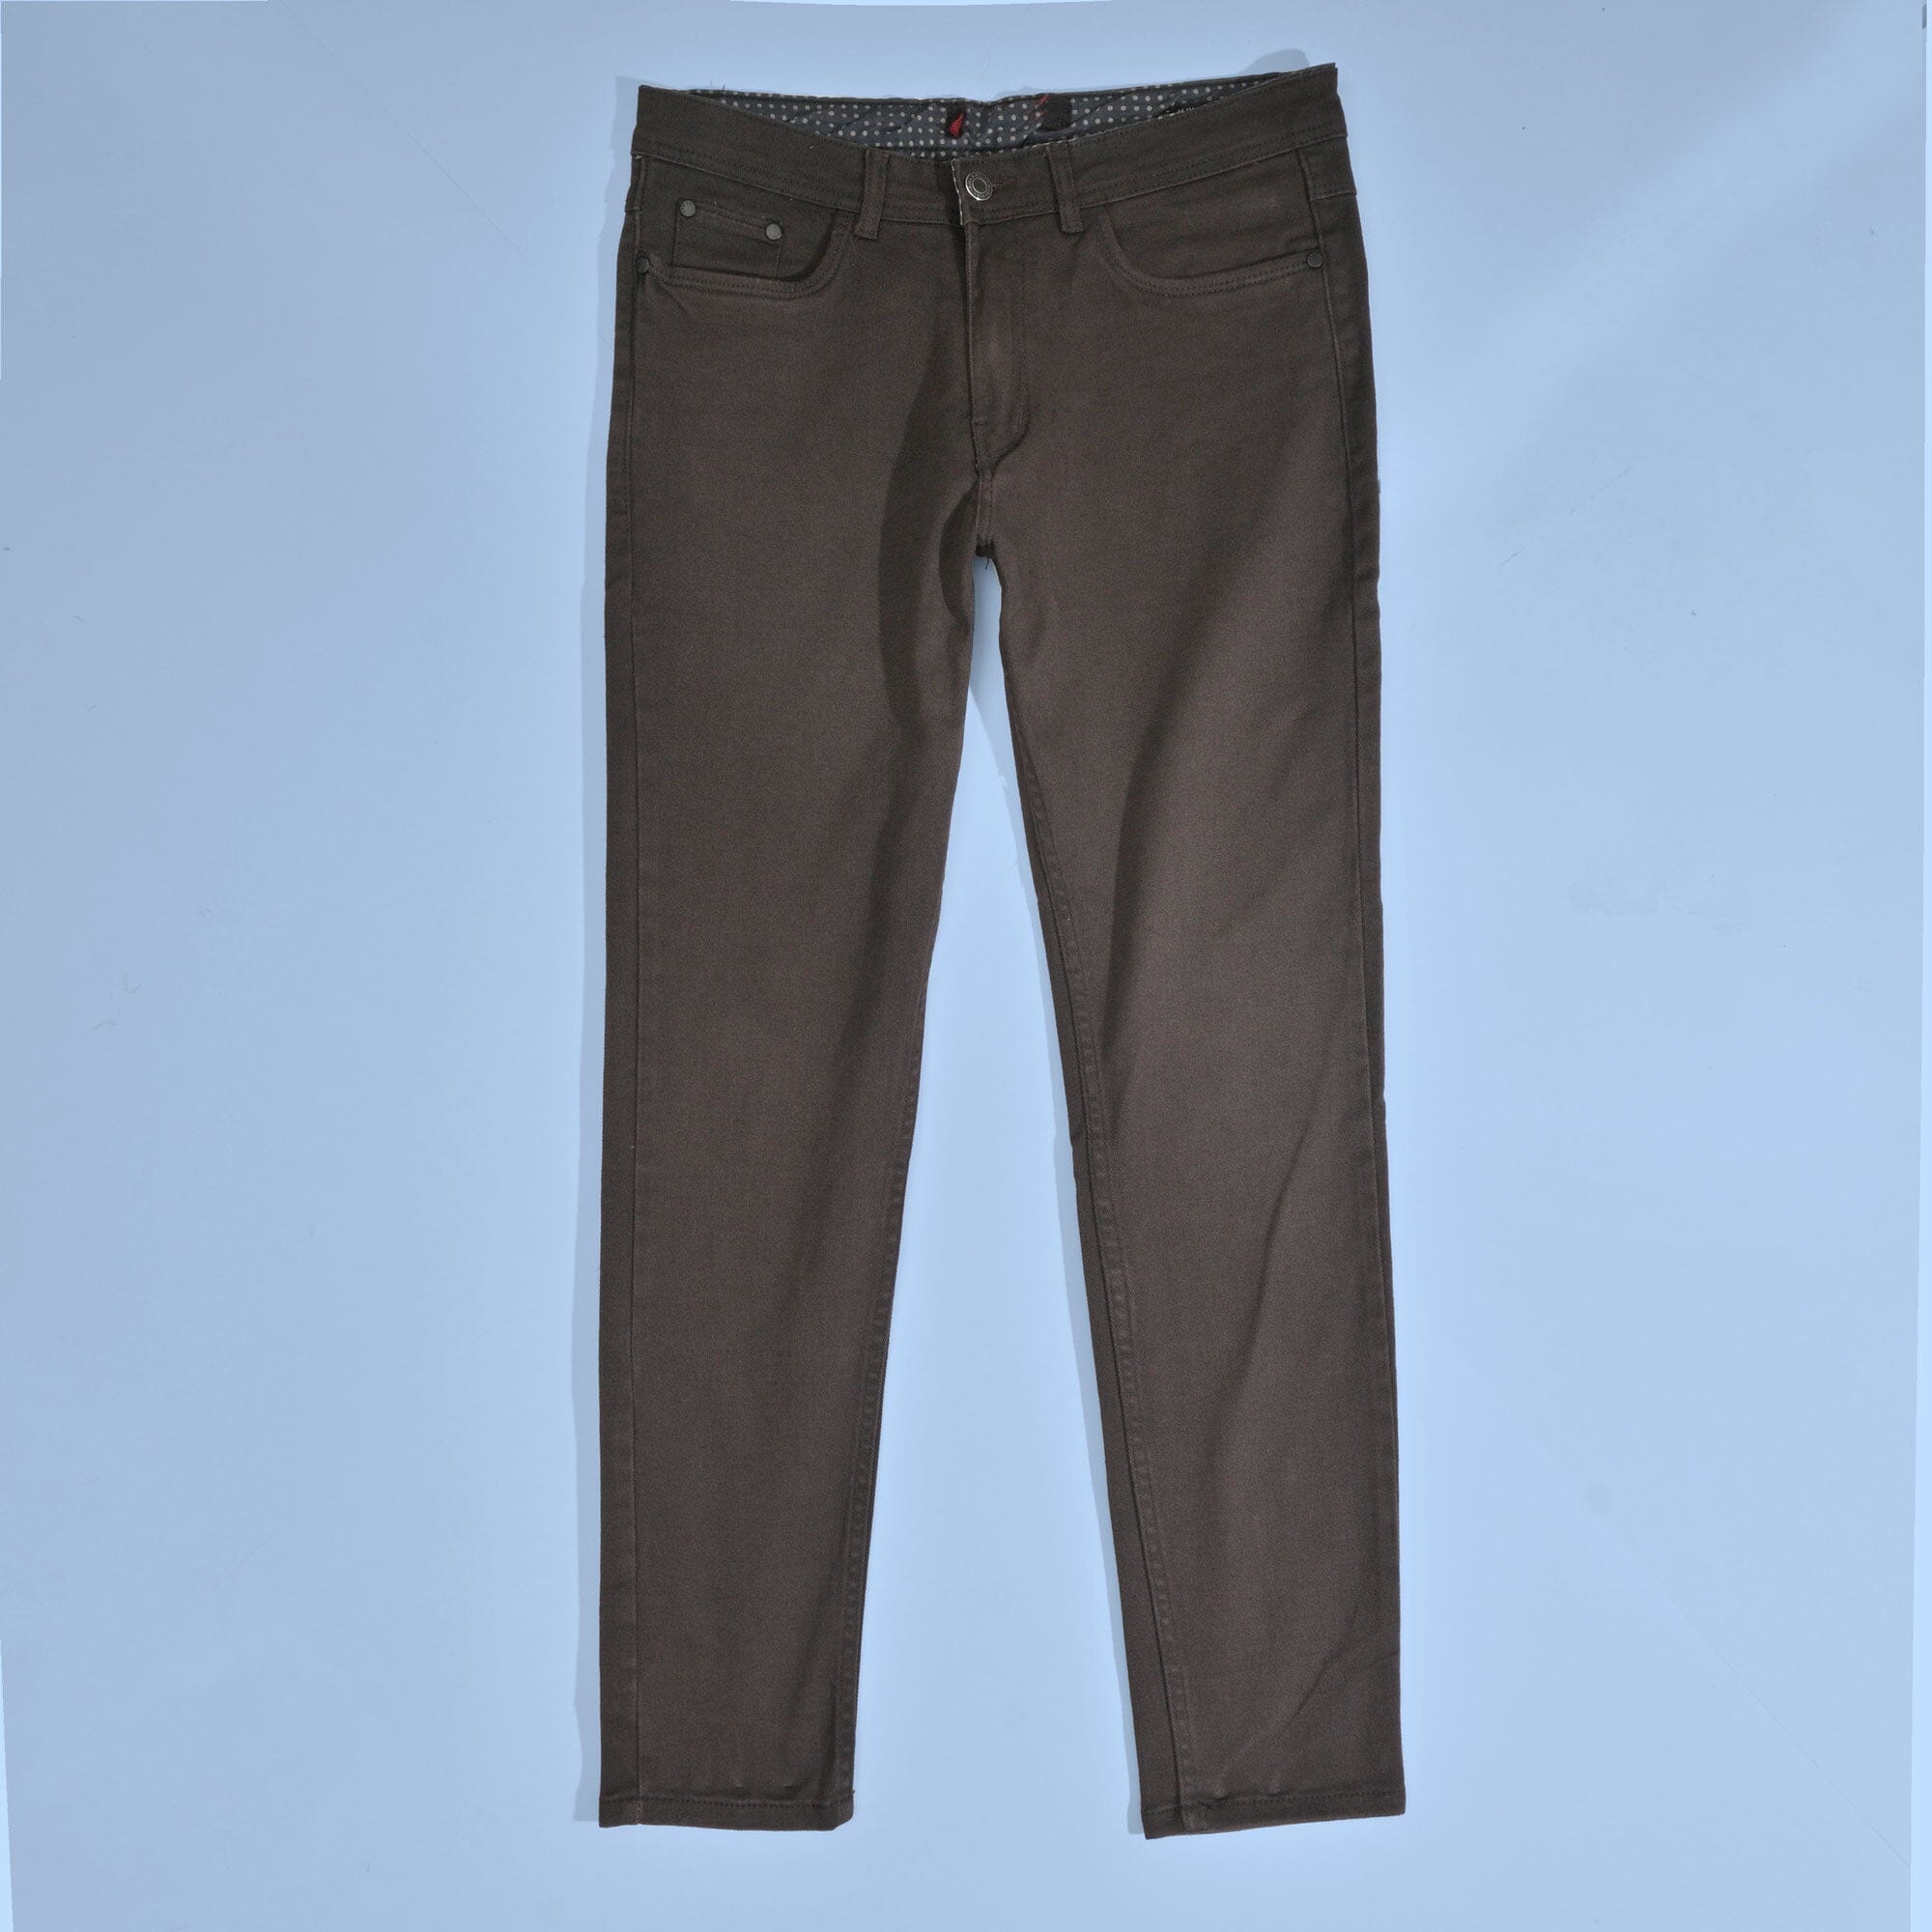 High Quality Ankle-Length Khaki Pants for Men